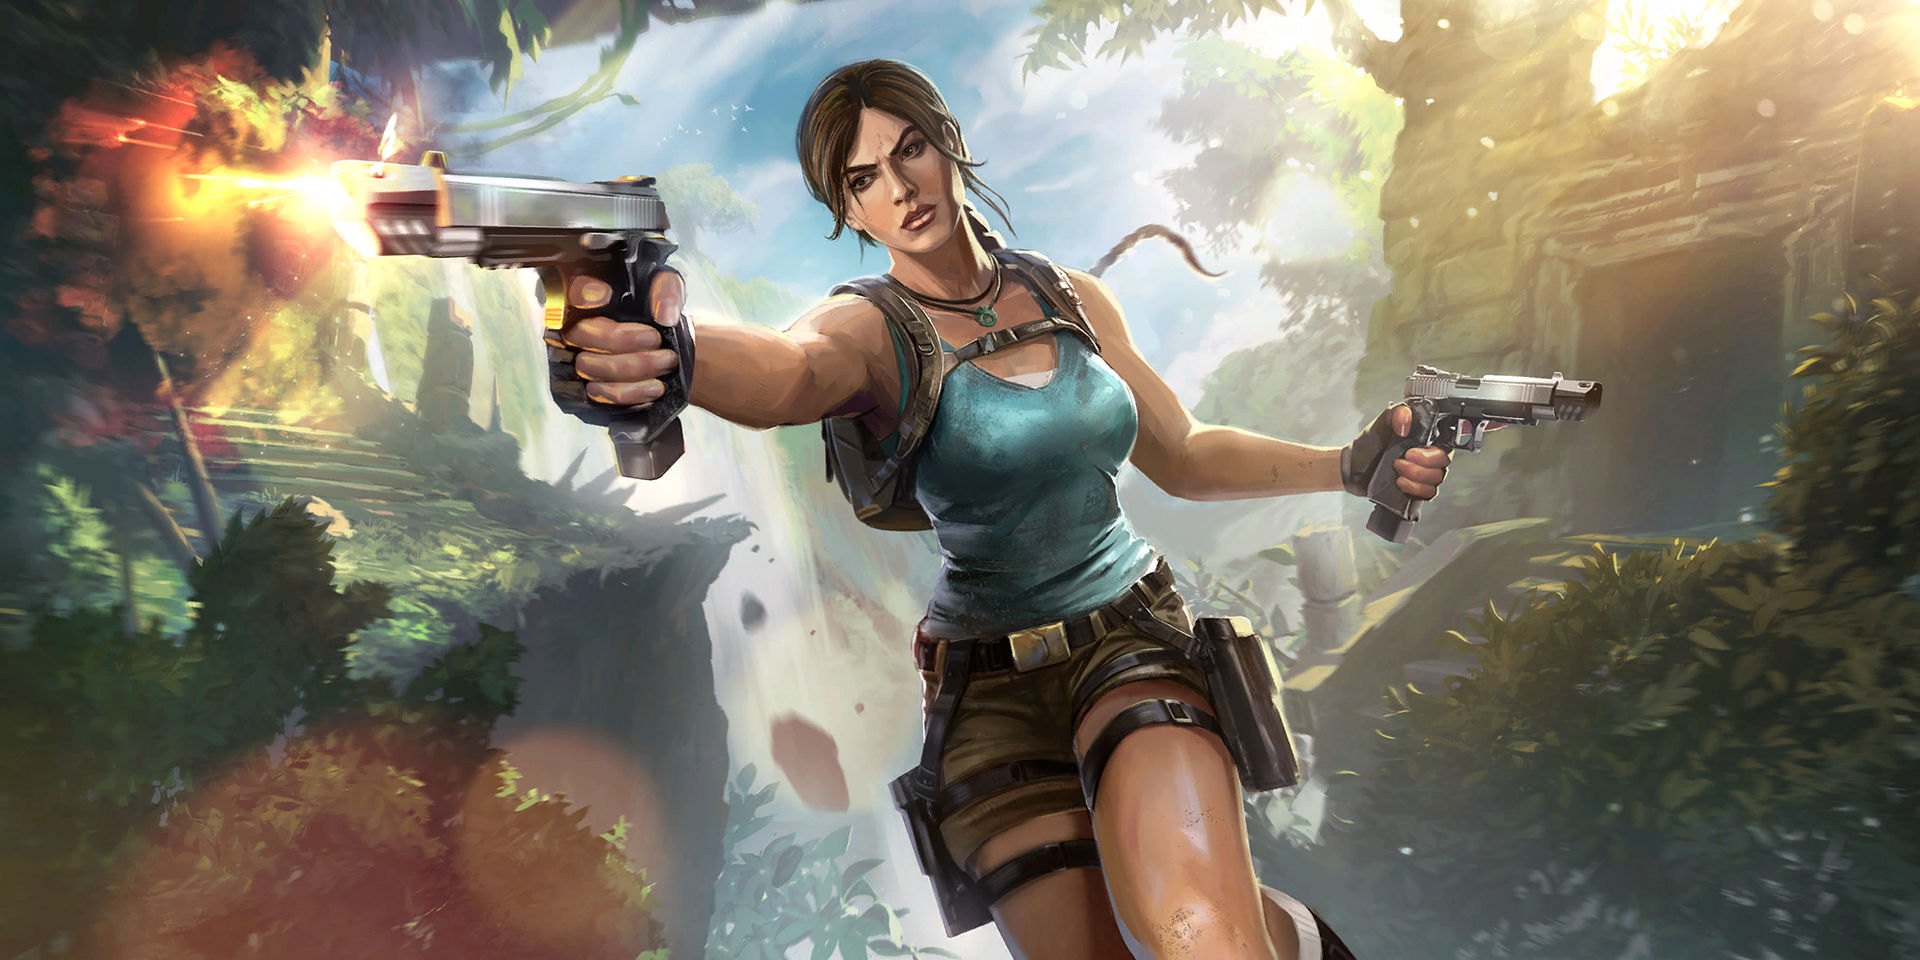 Lara Croft - Call of Duty by xKamillox on DeviantArt